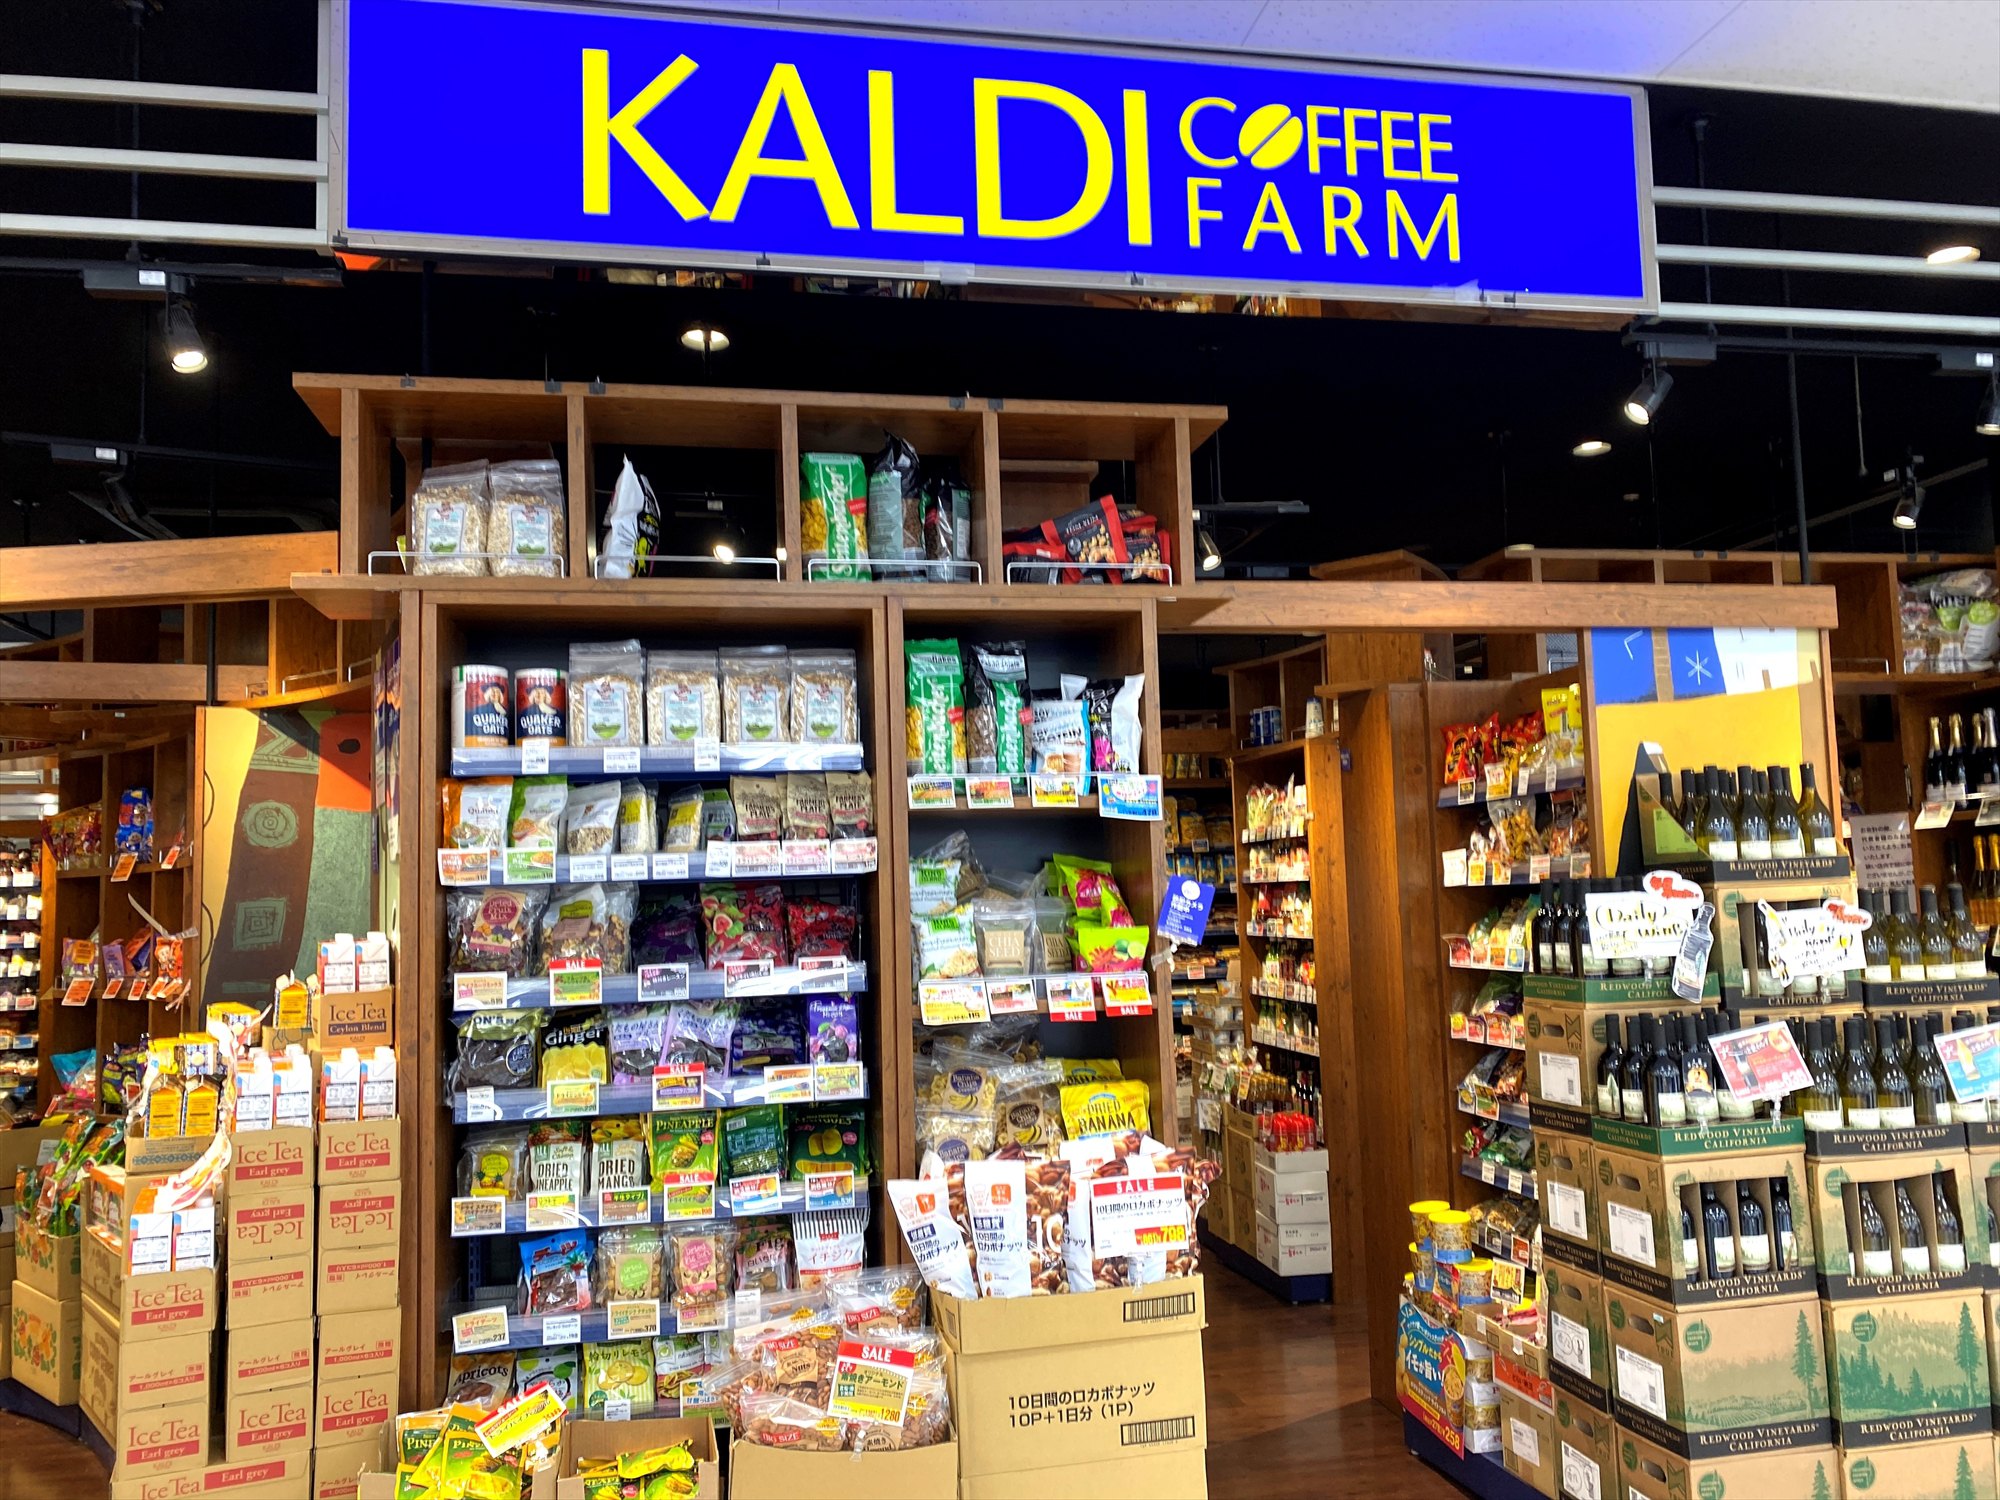 Kaldi Coffee Farm